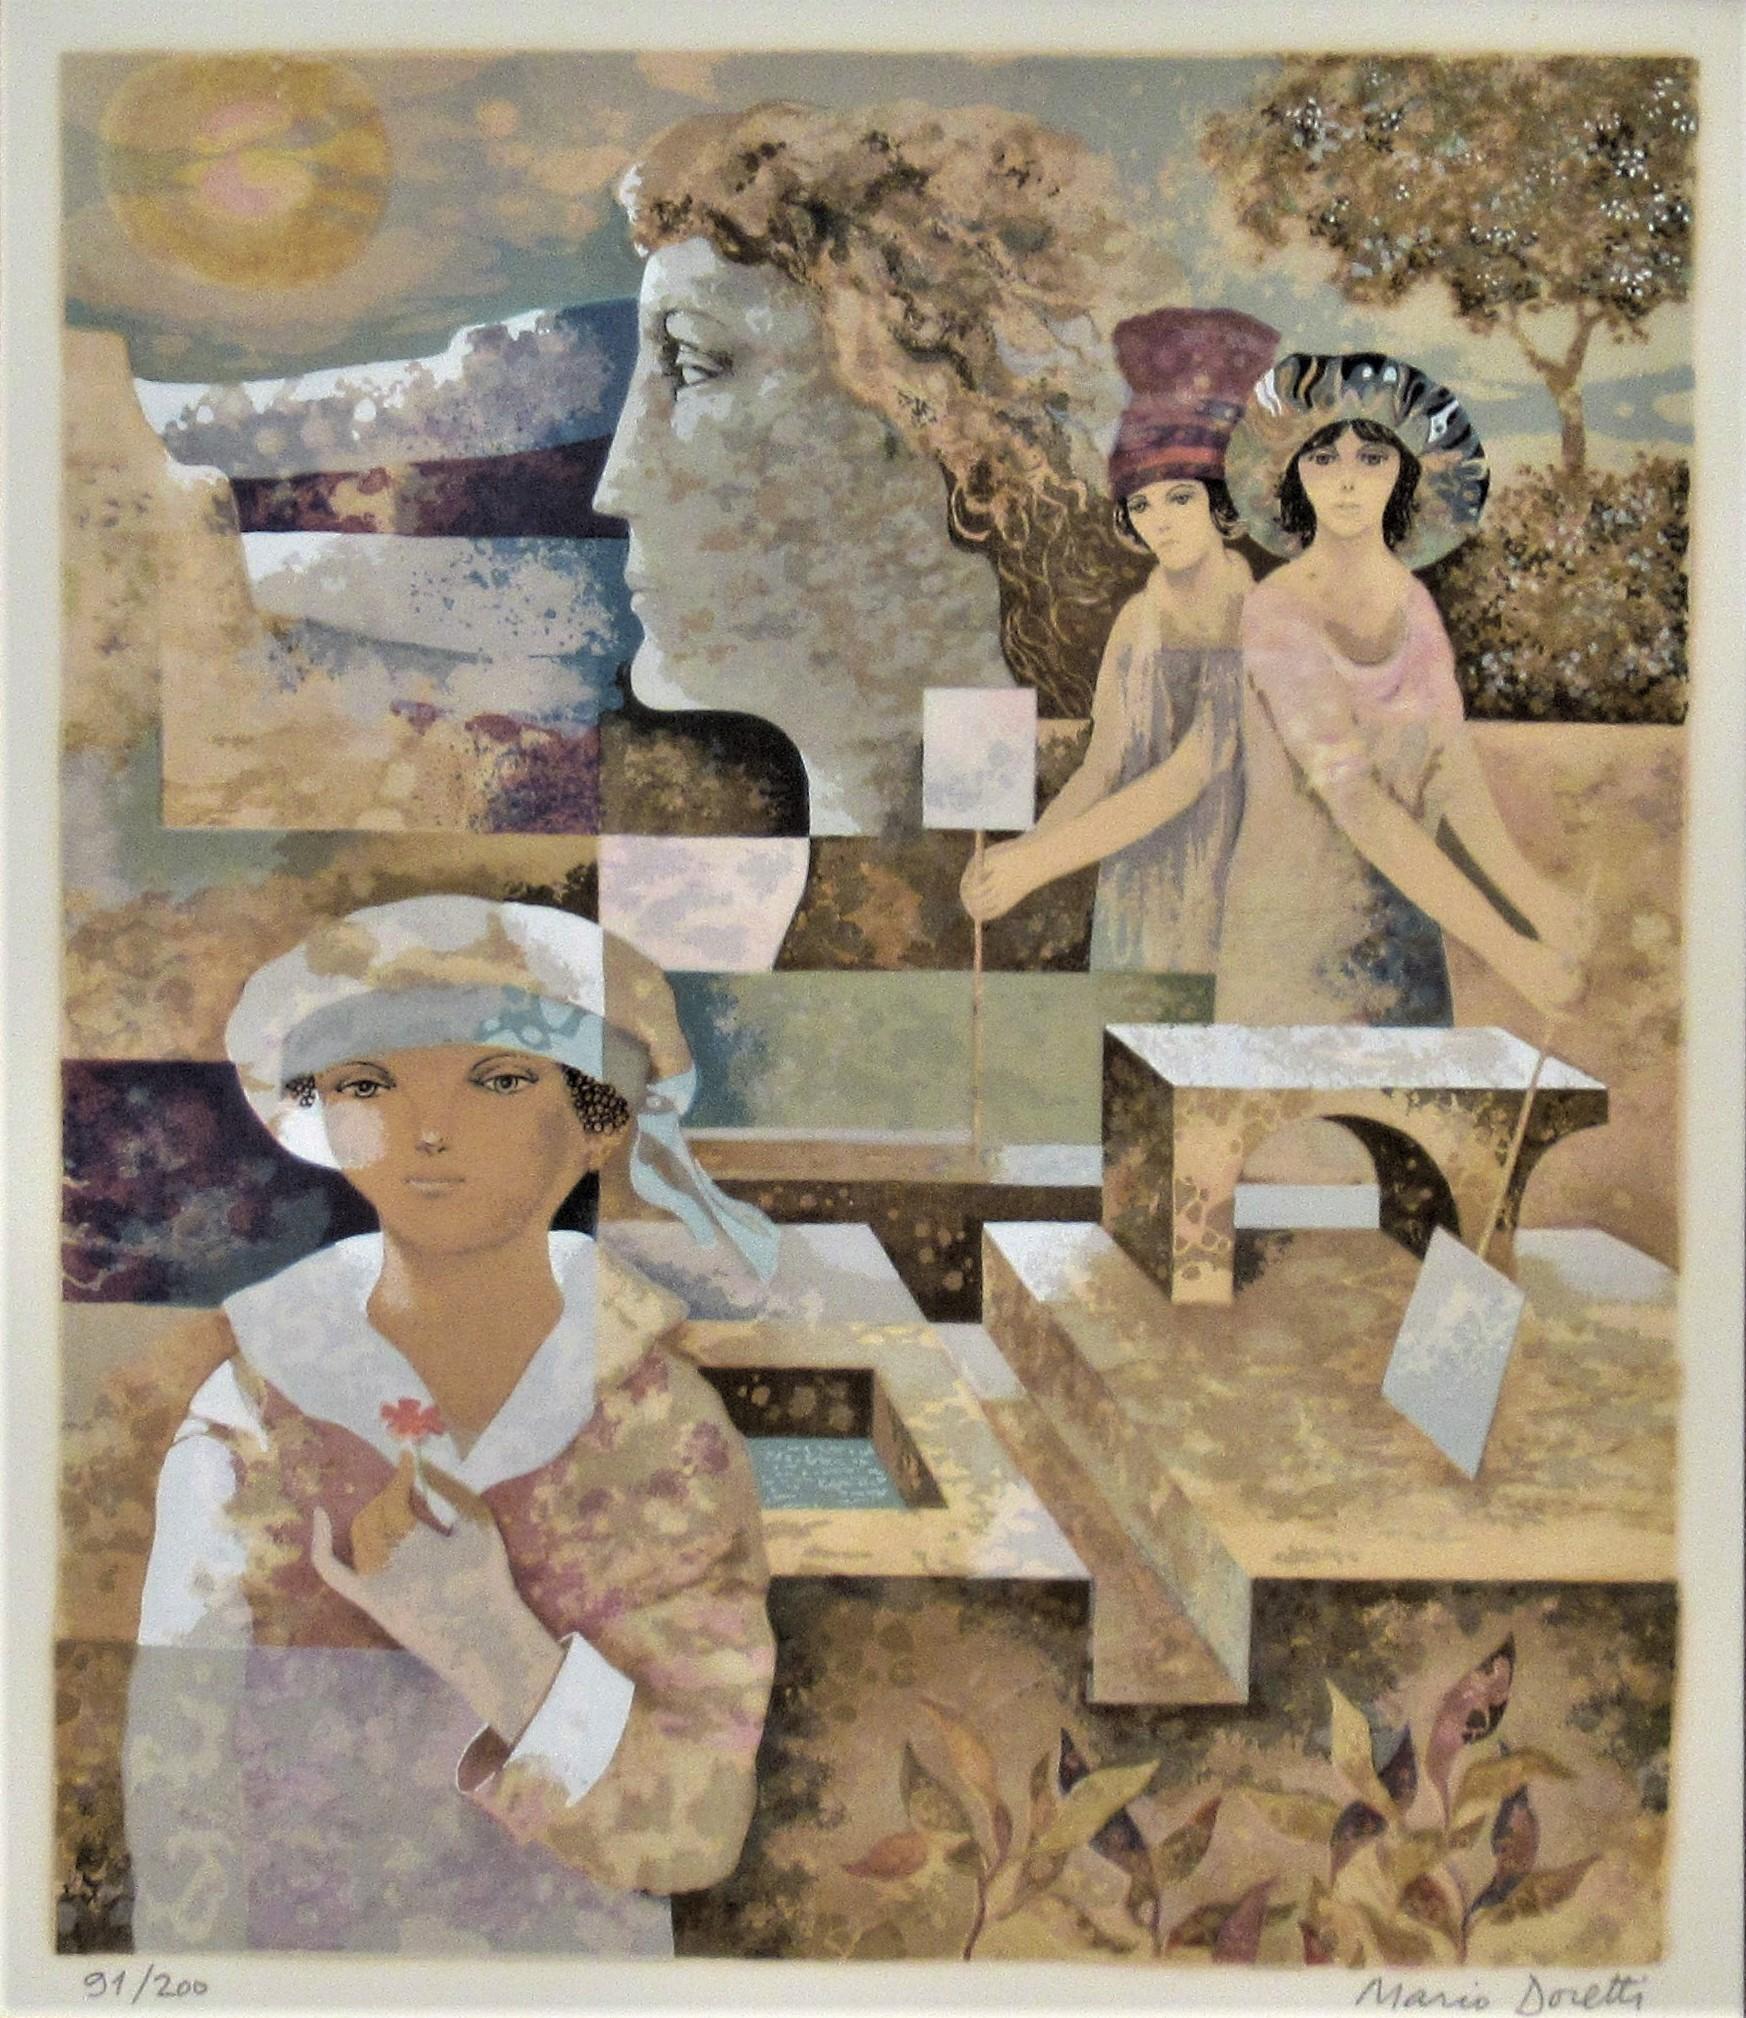 Surrealistische Szene mit Dame – Print von Mario Doretti